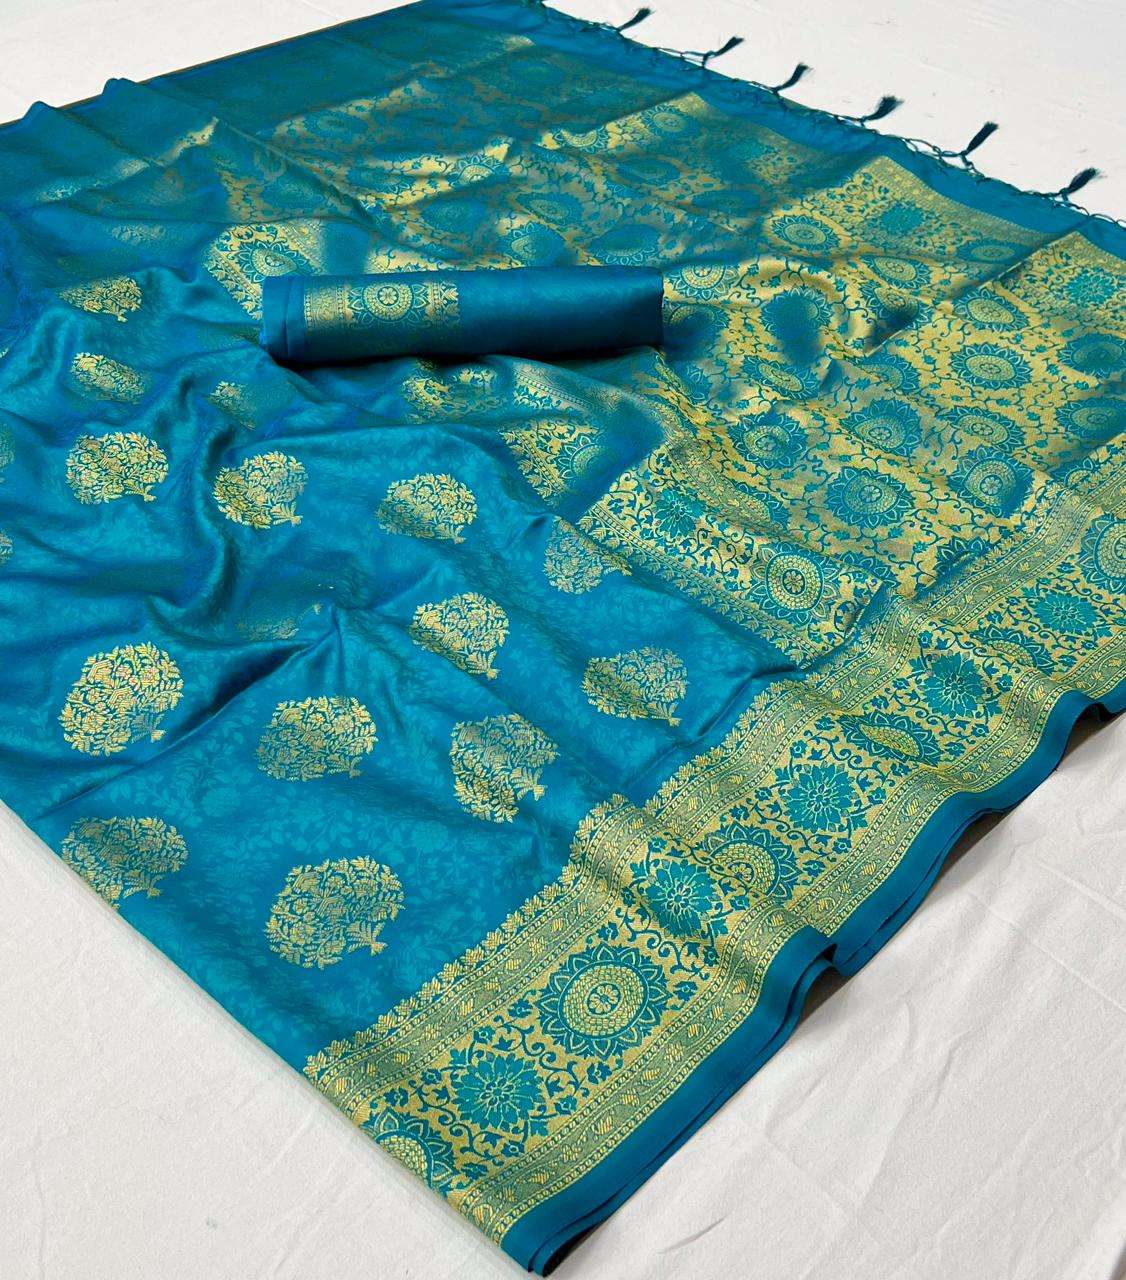 Rajtex KOSMIC Silk with Handloom Weaving design Rich look saree collection